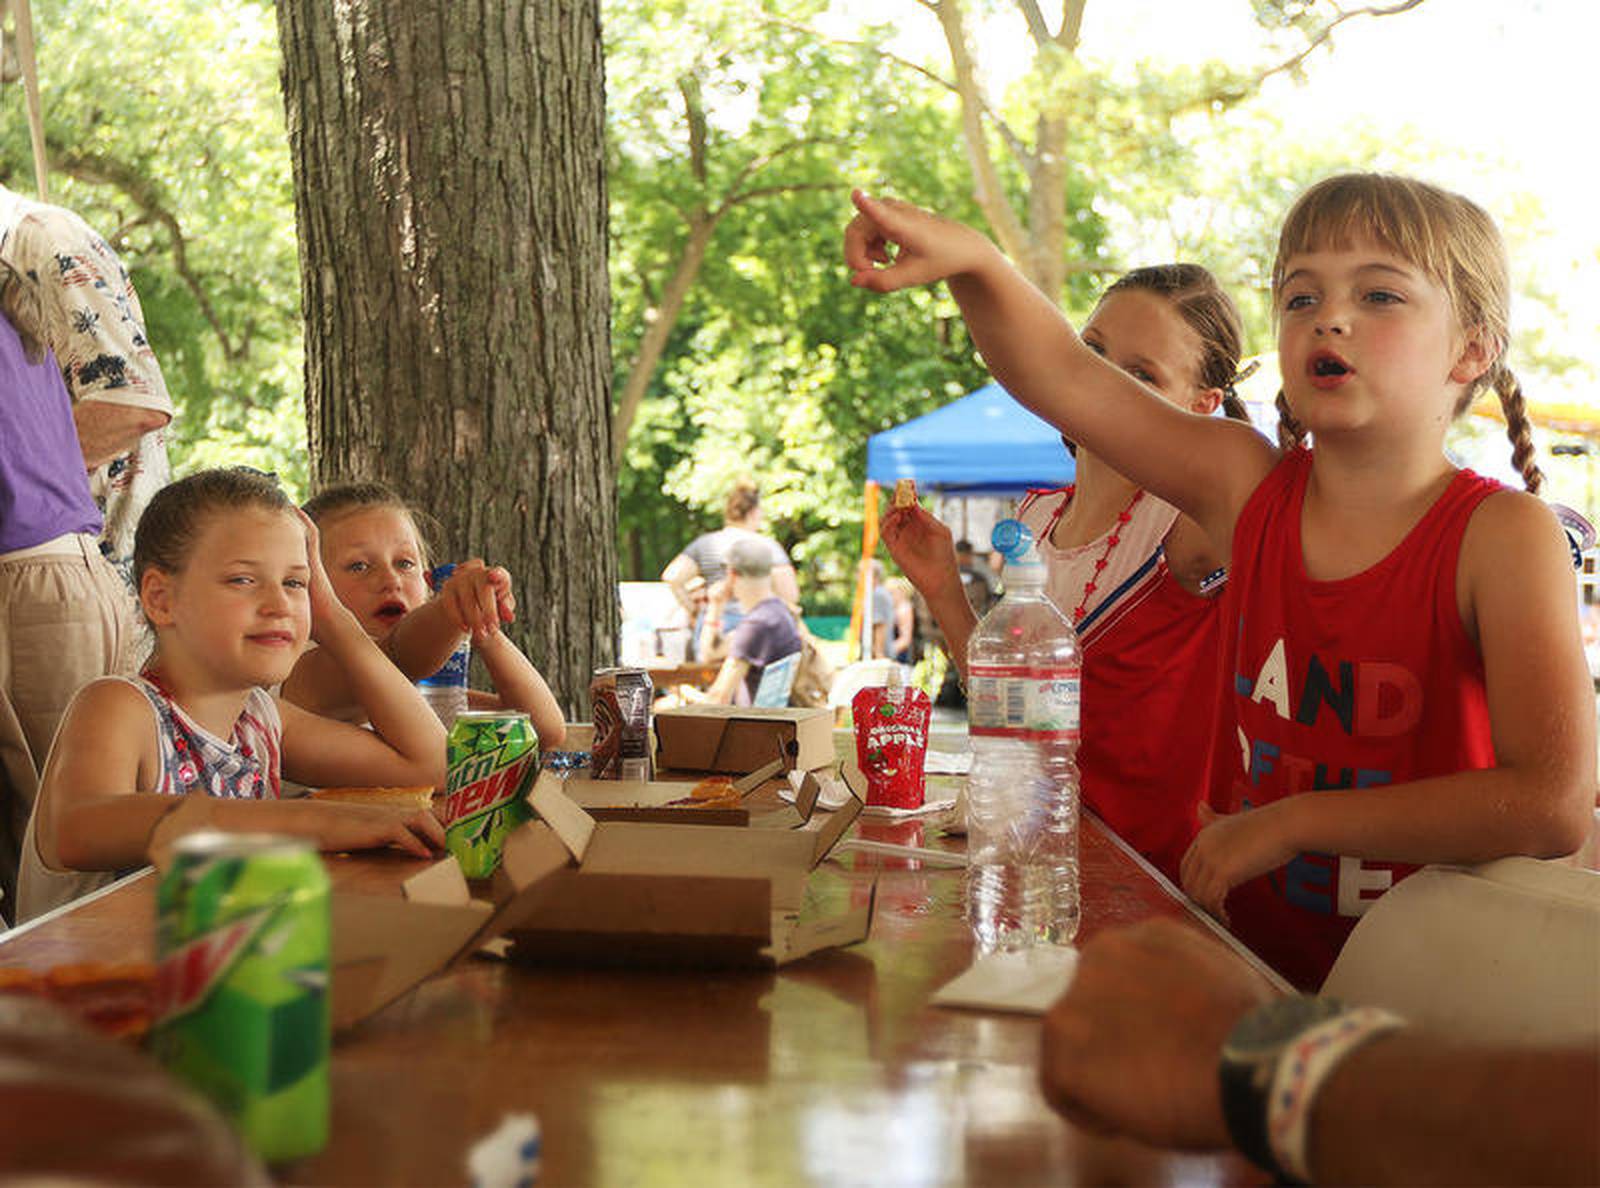 Fourth of July celebration kicks off Lakeside Fest in Crystal Lake